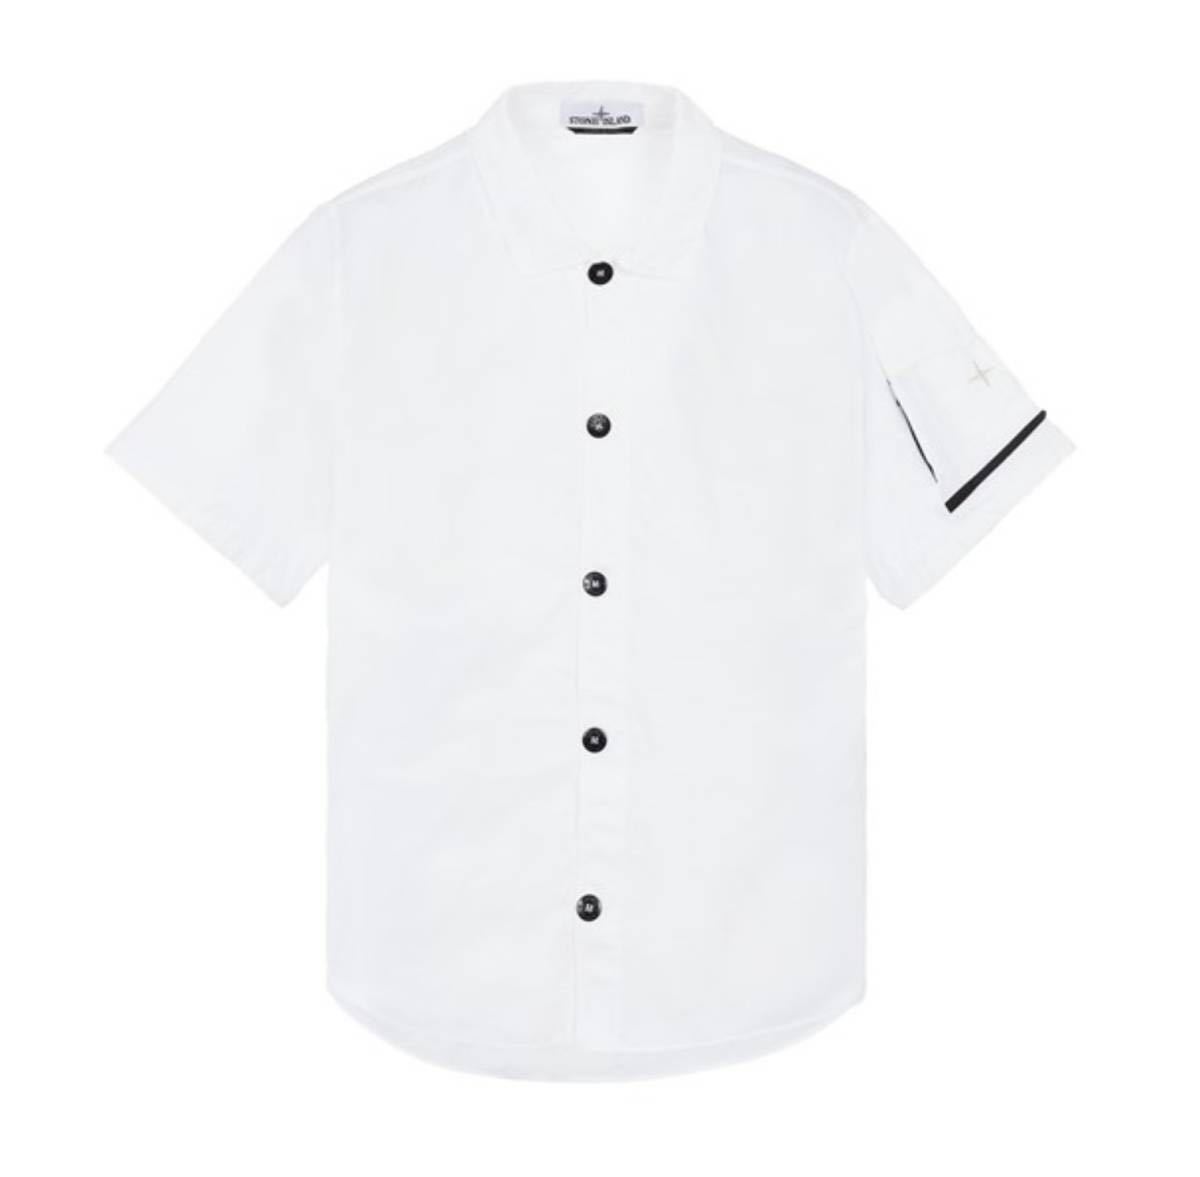 ☆Stone Island 100% ナイロン 軽量生地 Naslan Light仕上げ 半袖オーバーシャツ ホワイト Lサイズ 着用1回 美品 ストーンアイランド ☆